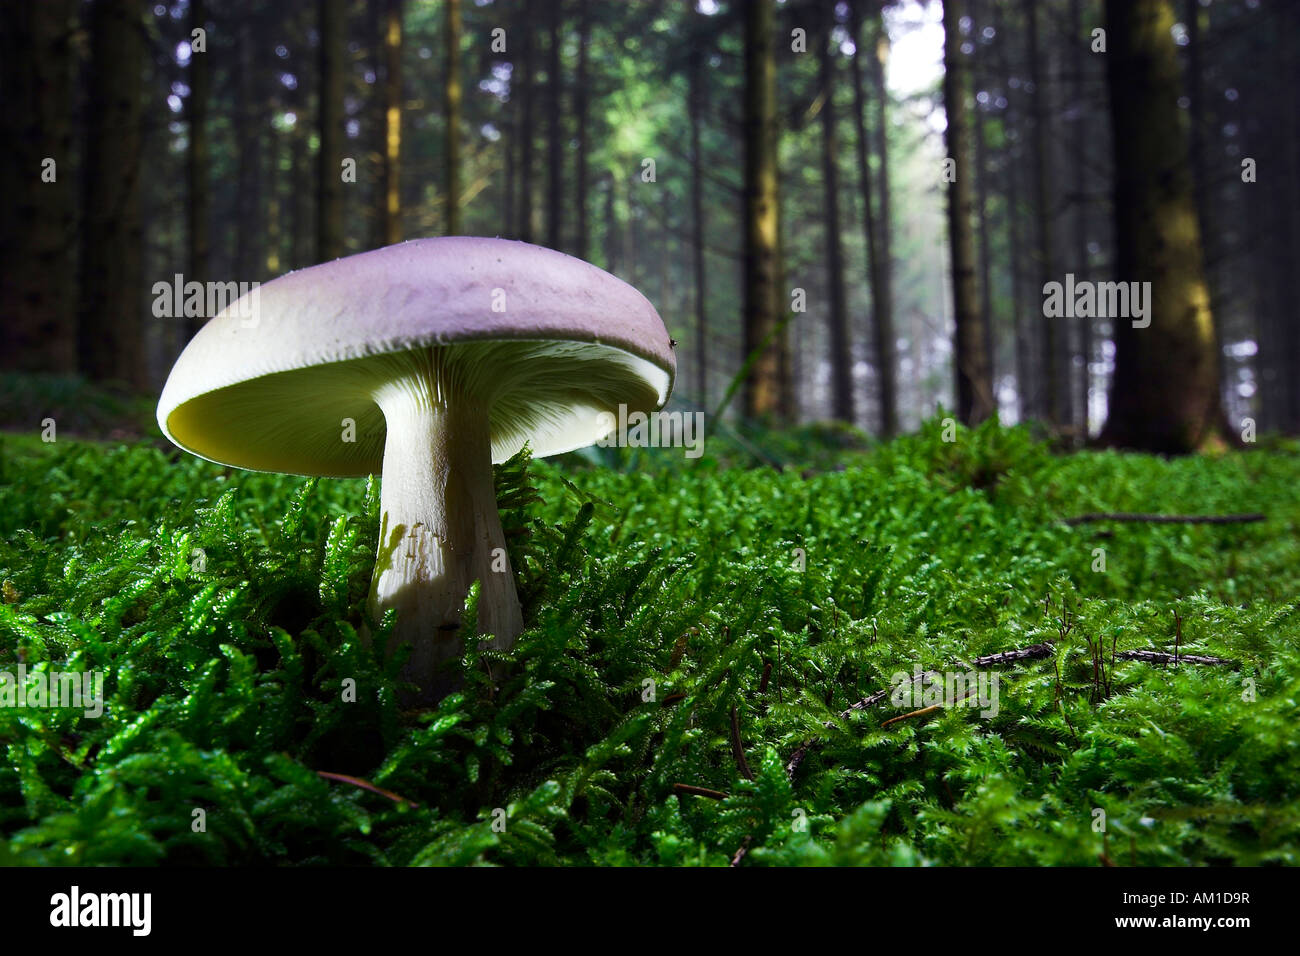 Illuminated mushroom, wide angled shot Stock Photo